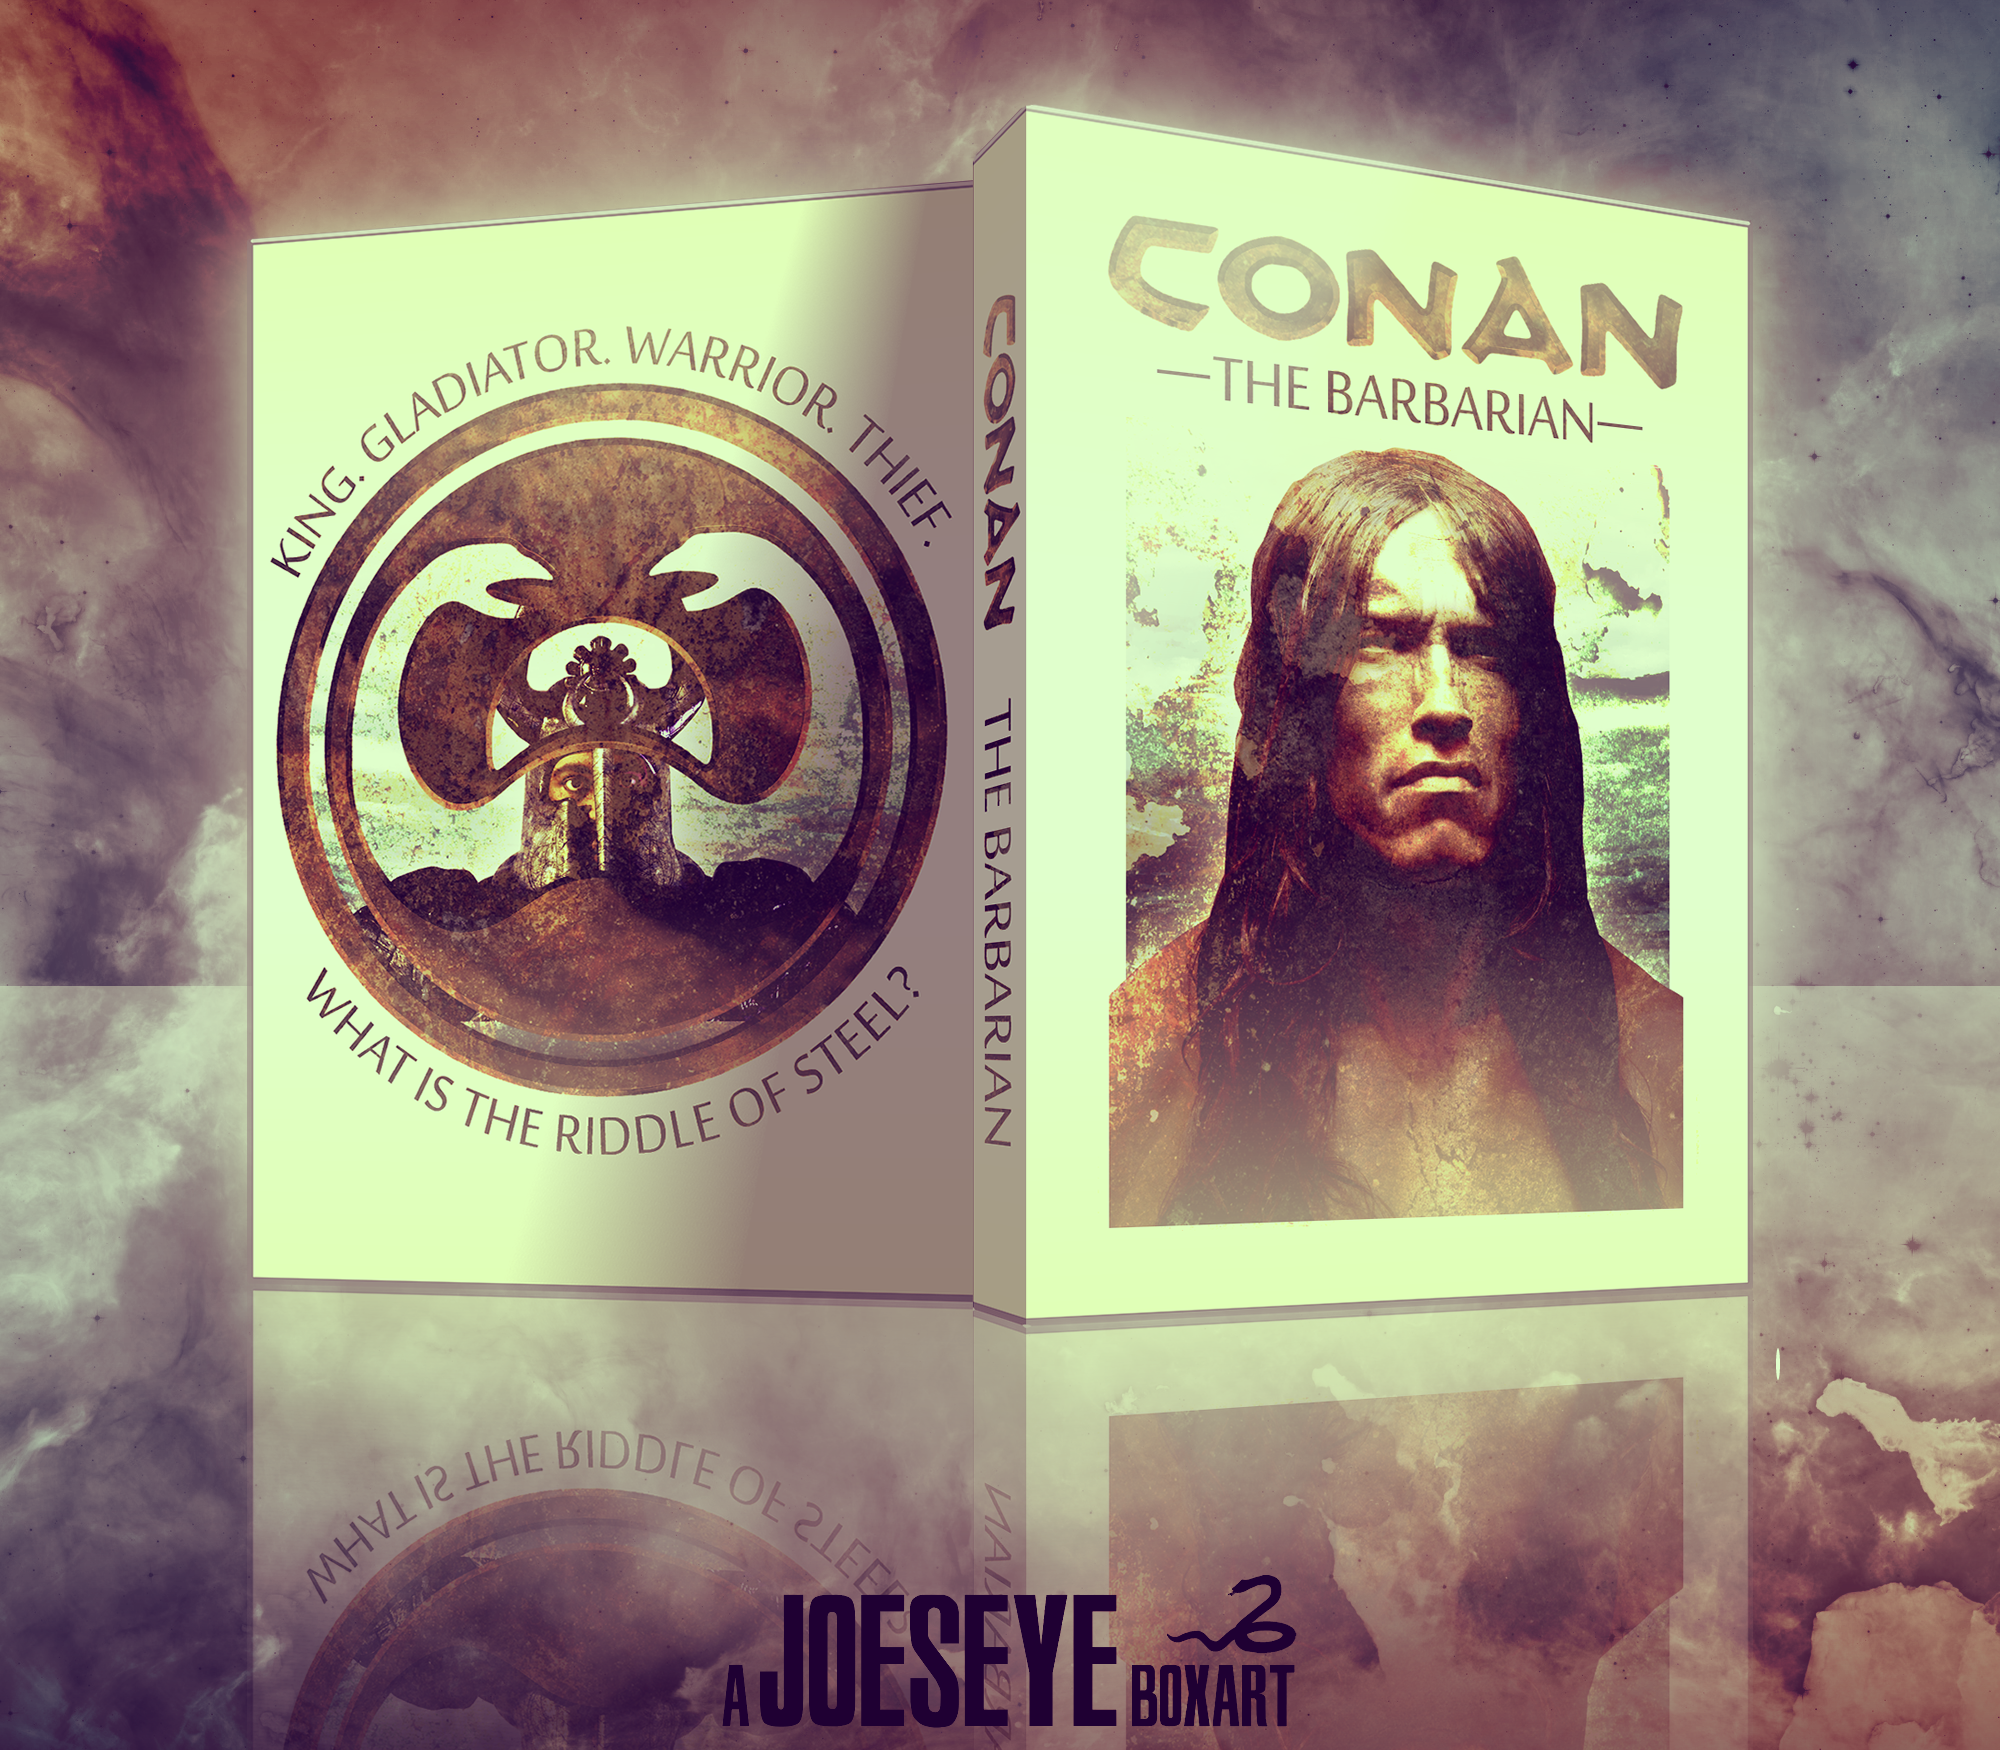 Conan The Barbarian box cover